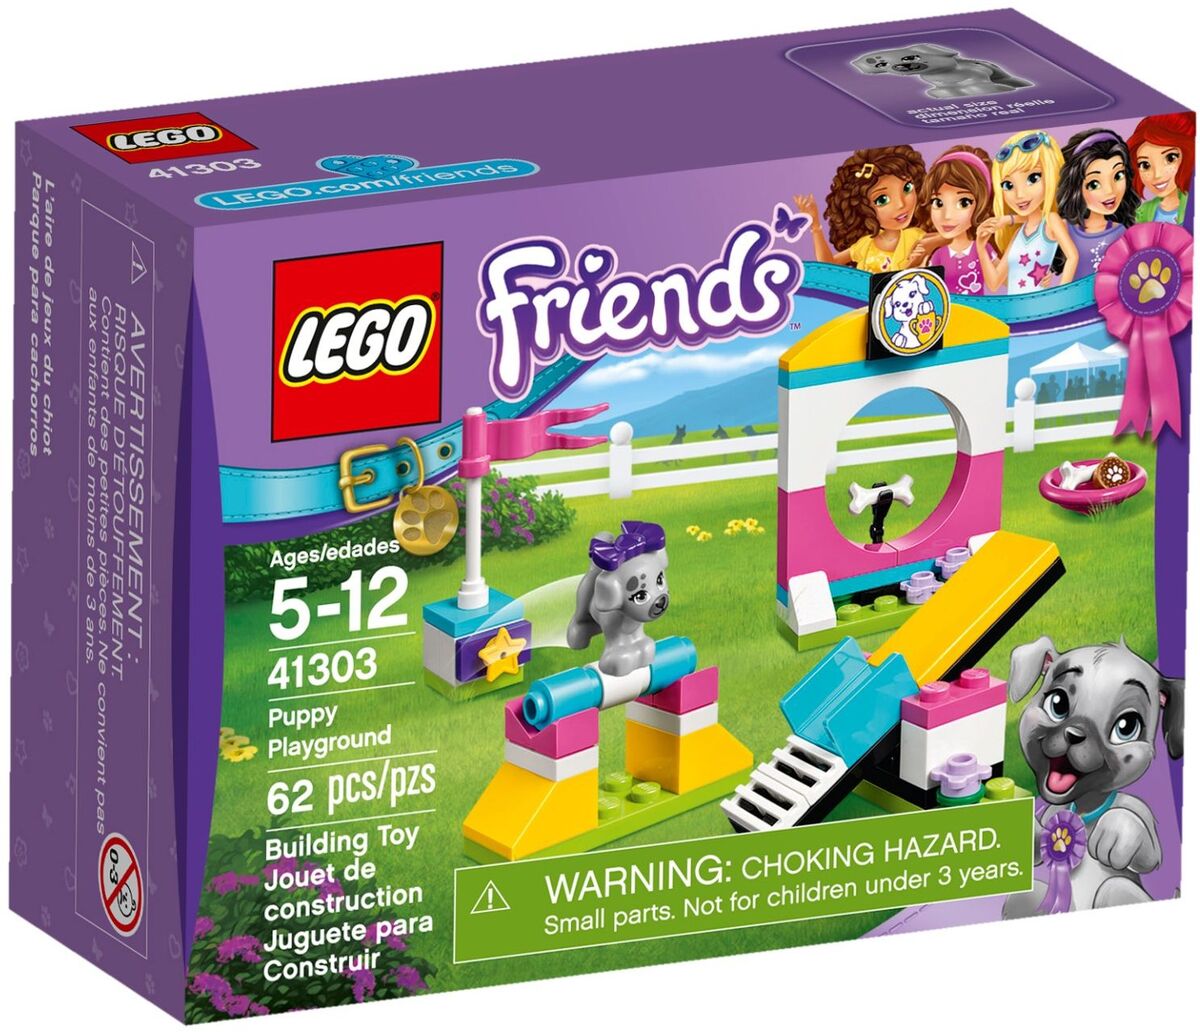 Category:Animal Sets | LEGO Friends Wiki | Fandom